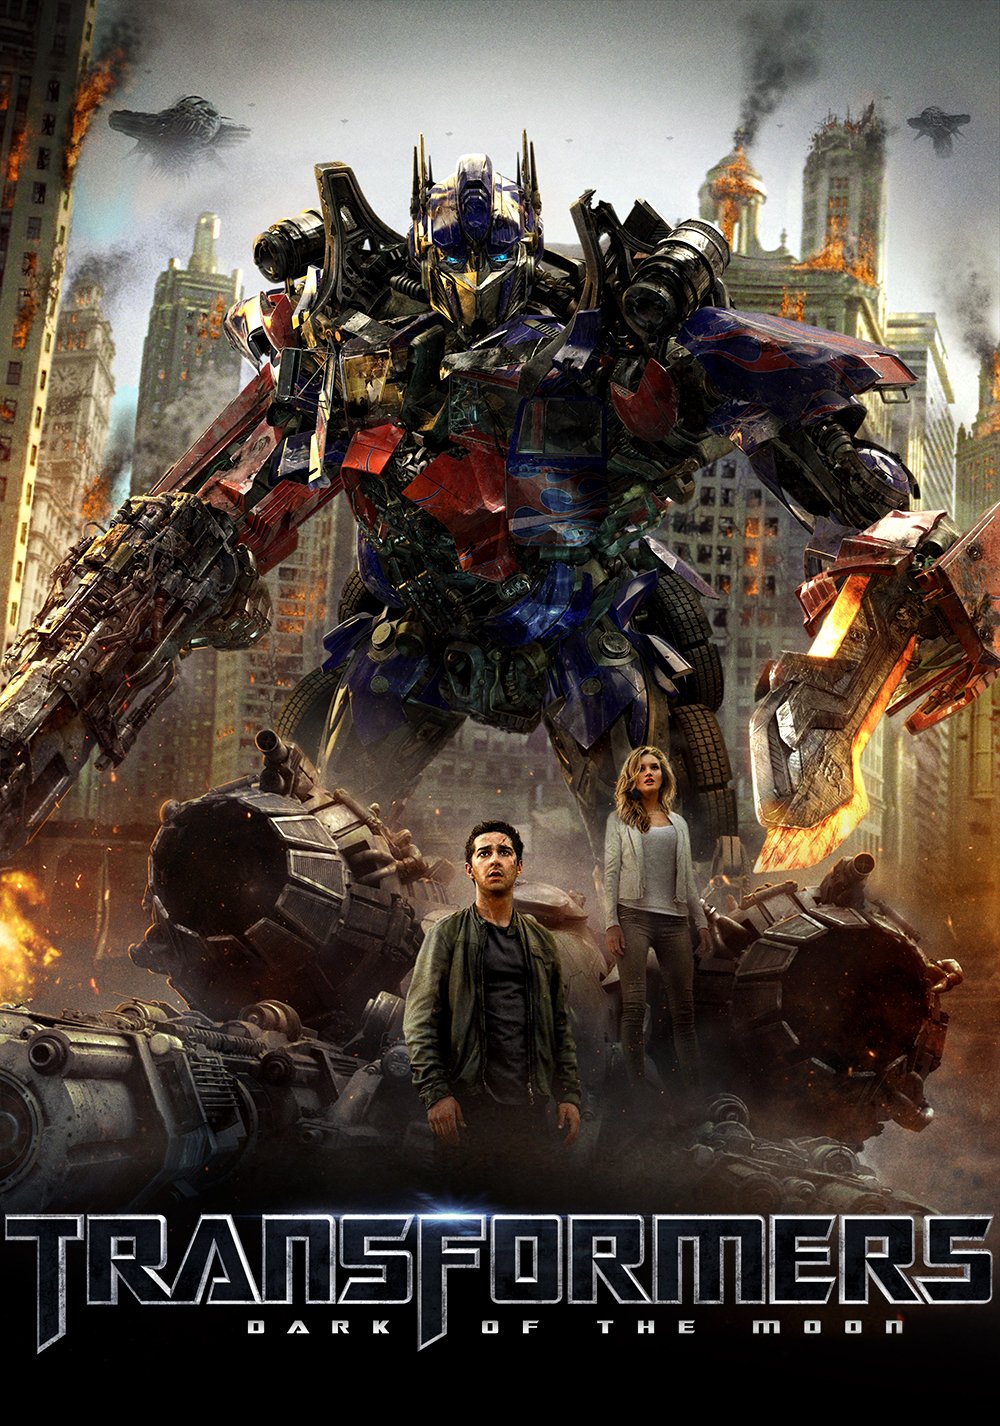 Transformer 1 full movie free downloading